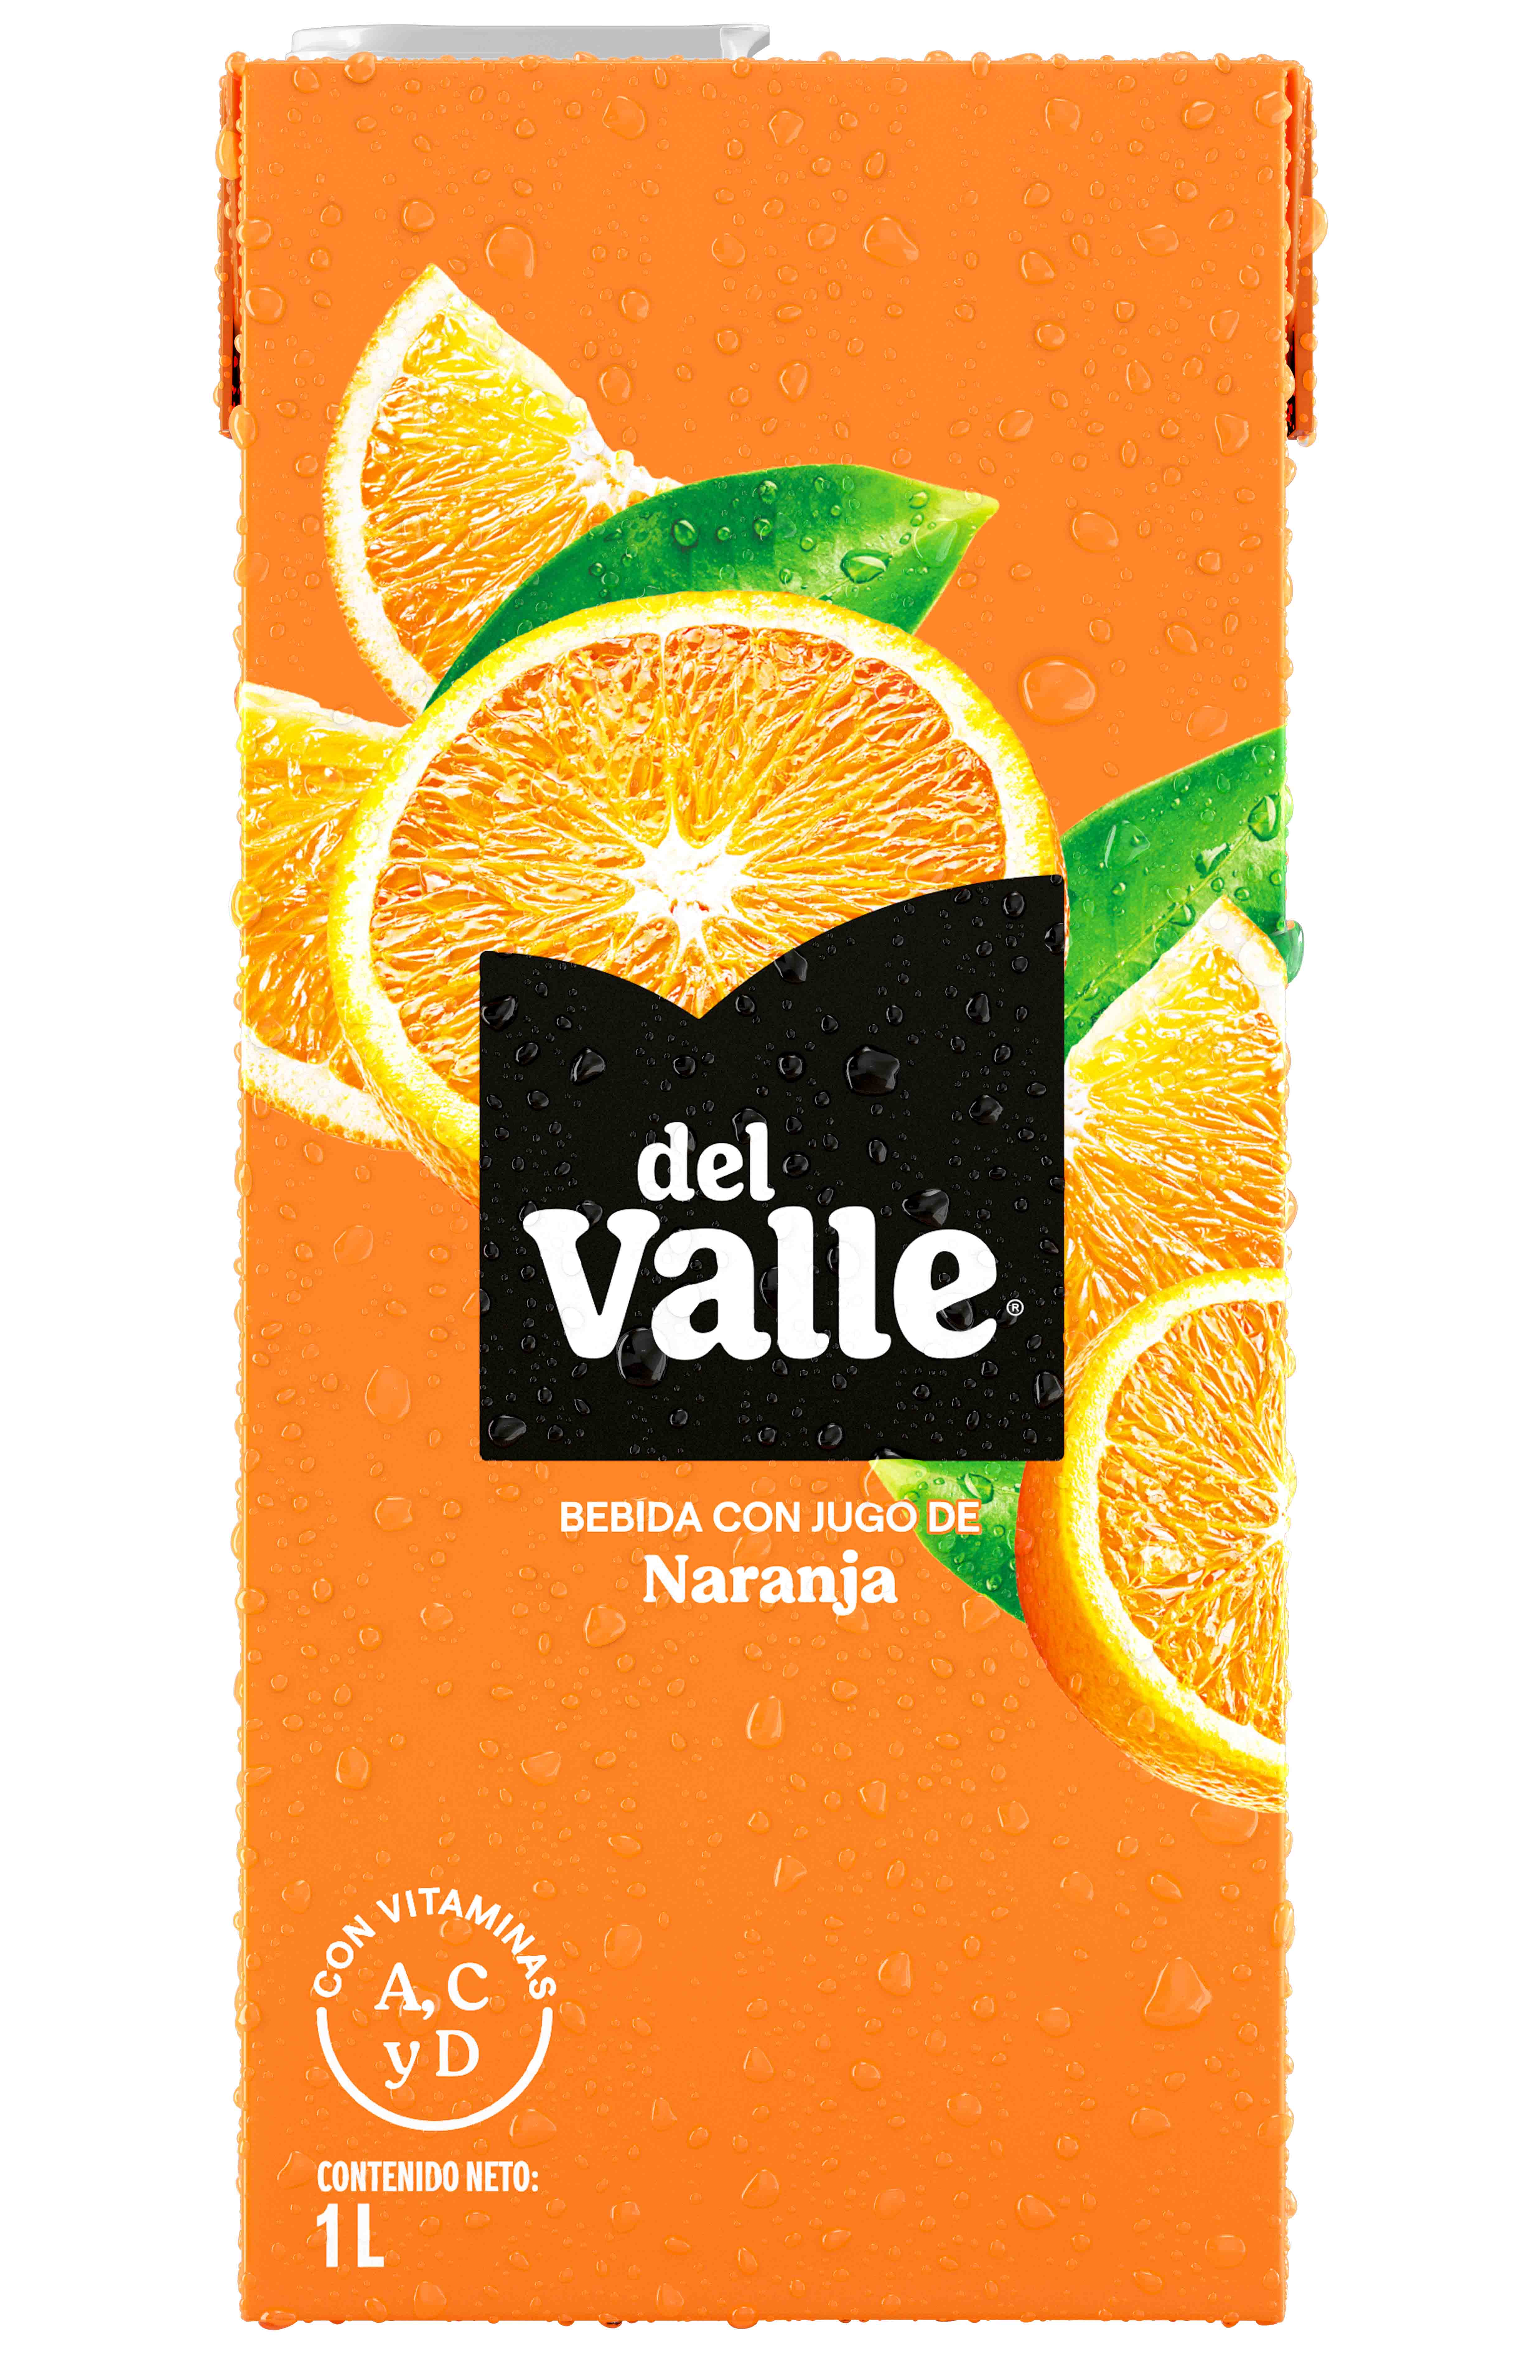 Tetra Brik de Del Valle Bebida con Jugo de Naranja